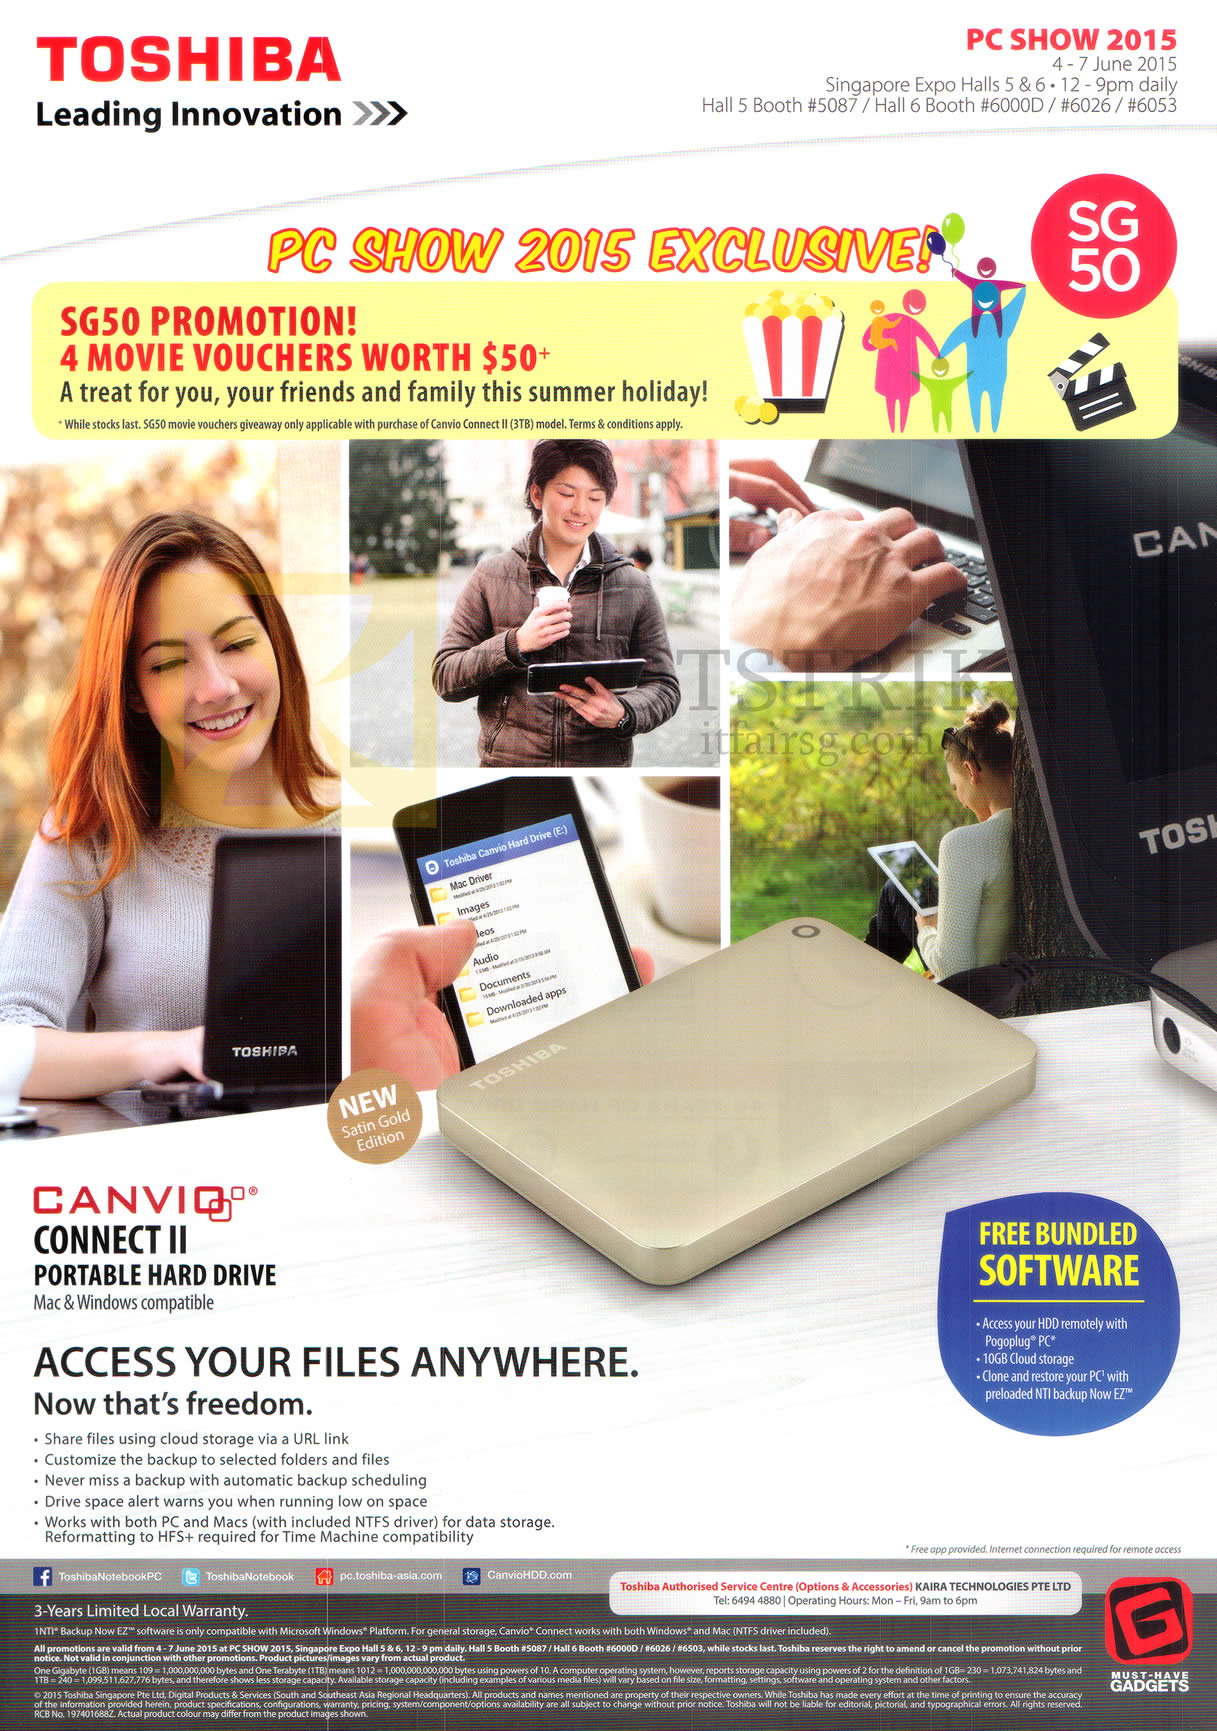 PC SHOW 2015 price list image brochure of Toshiba Canvio Connect II Portable Hard Disk Drive